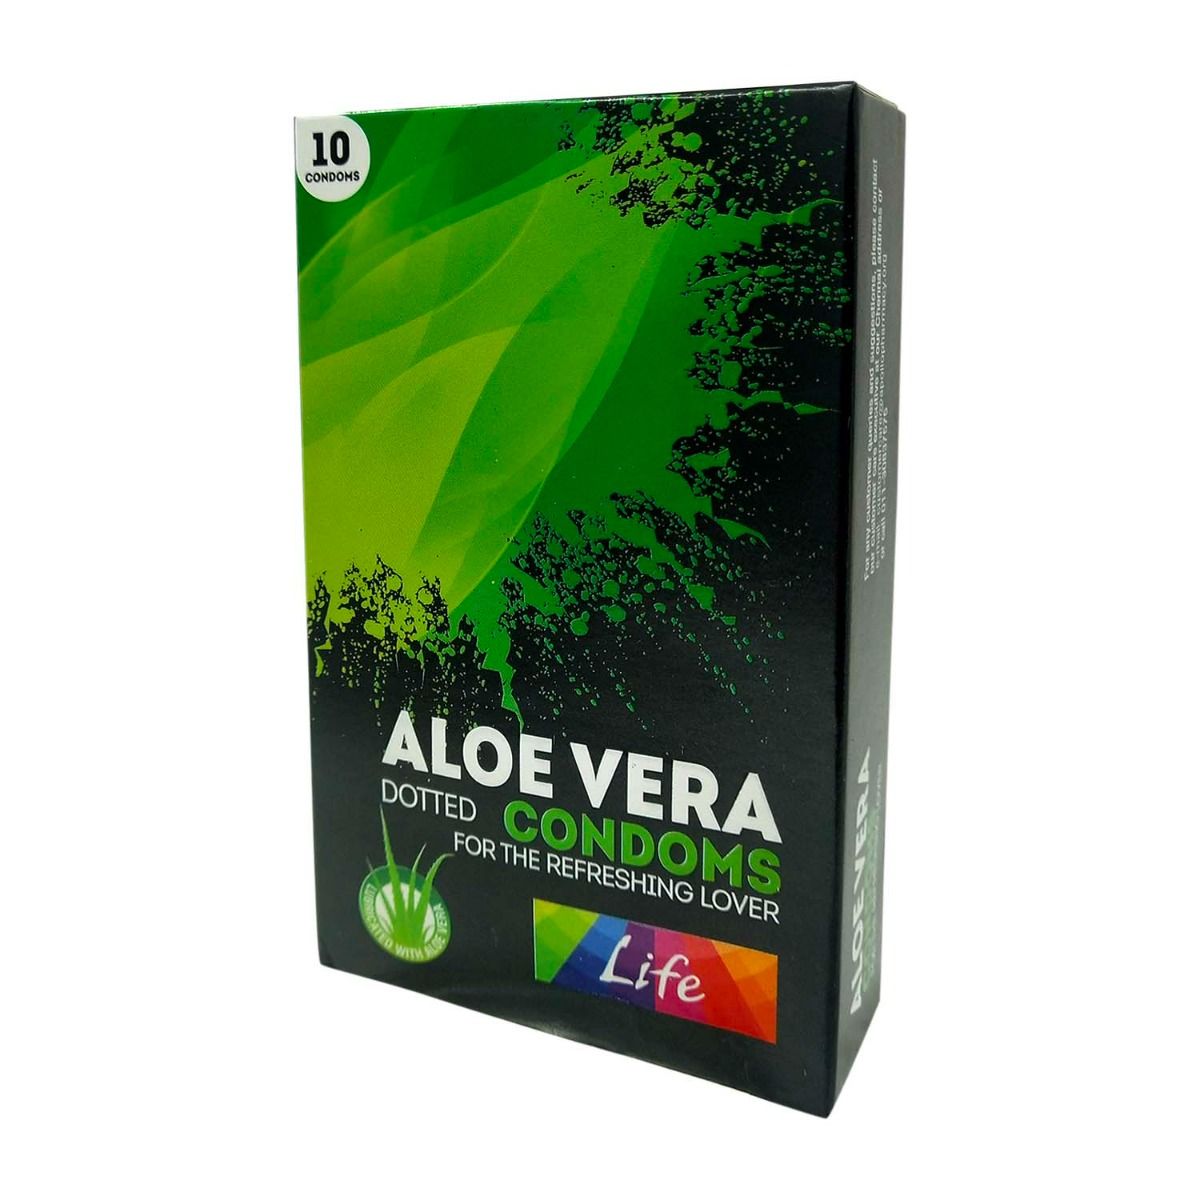 Buy Apollo Life Aloe Vera Dotted Condoms, 10 Count Online